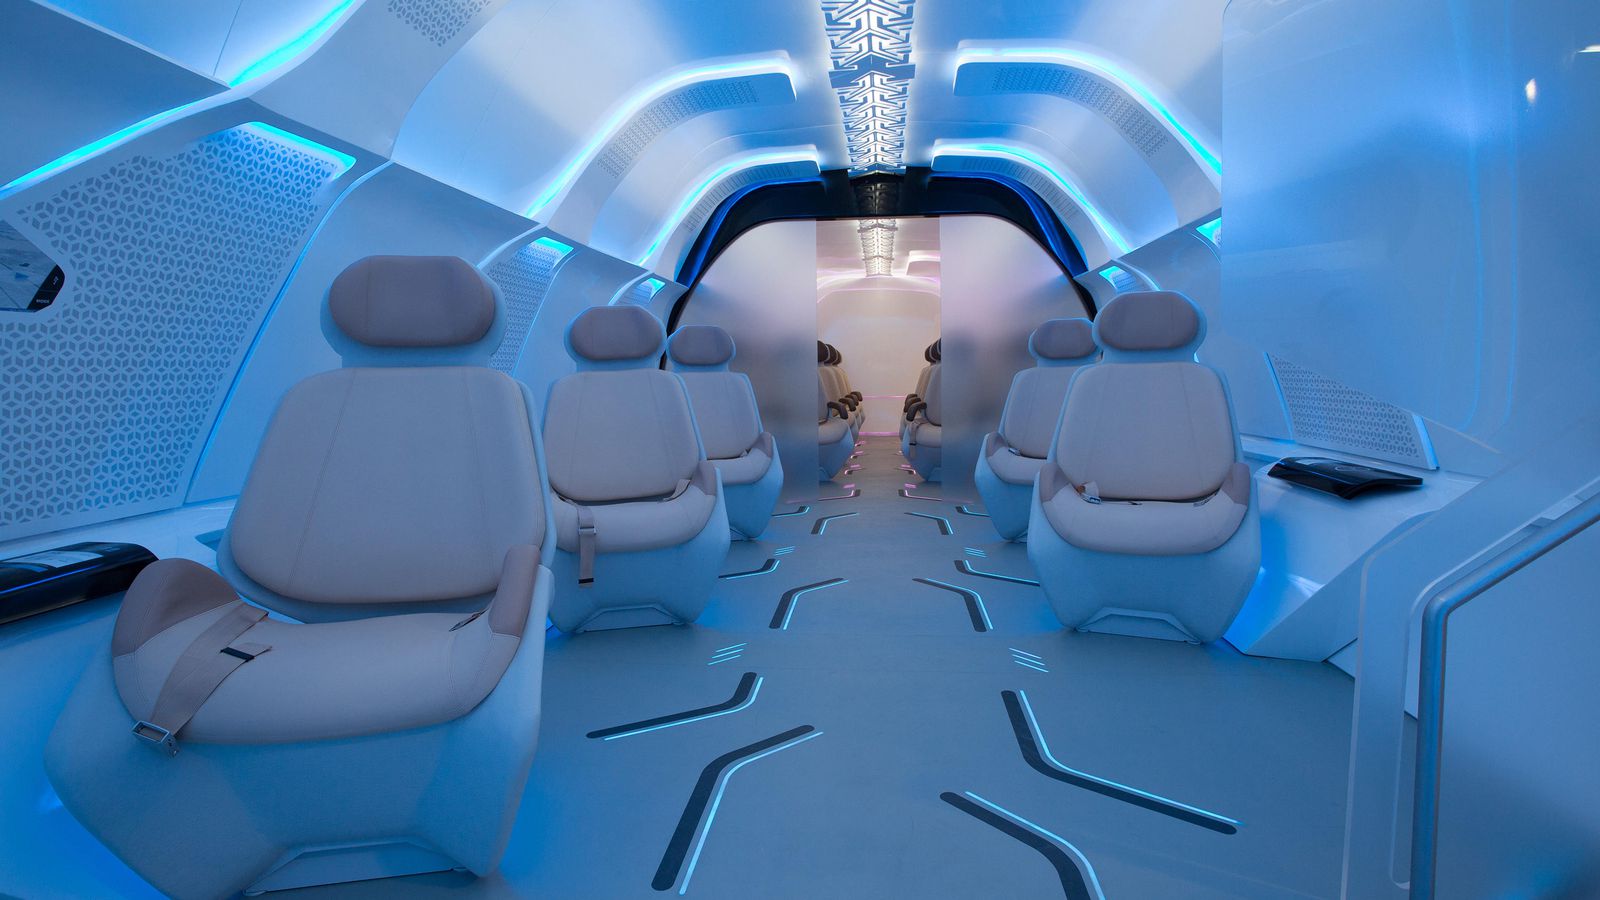 Hyperloop travel looks cushy, thanks to BMW Designworks